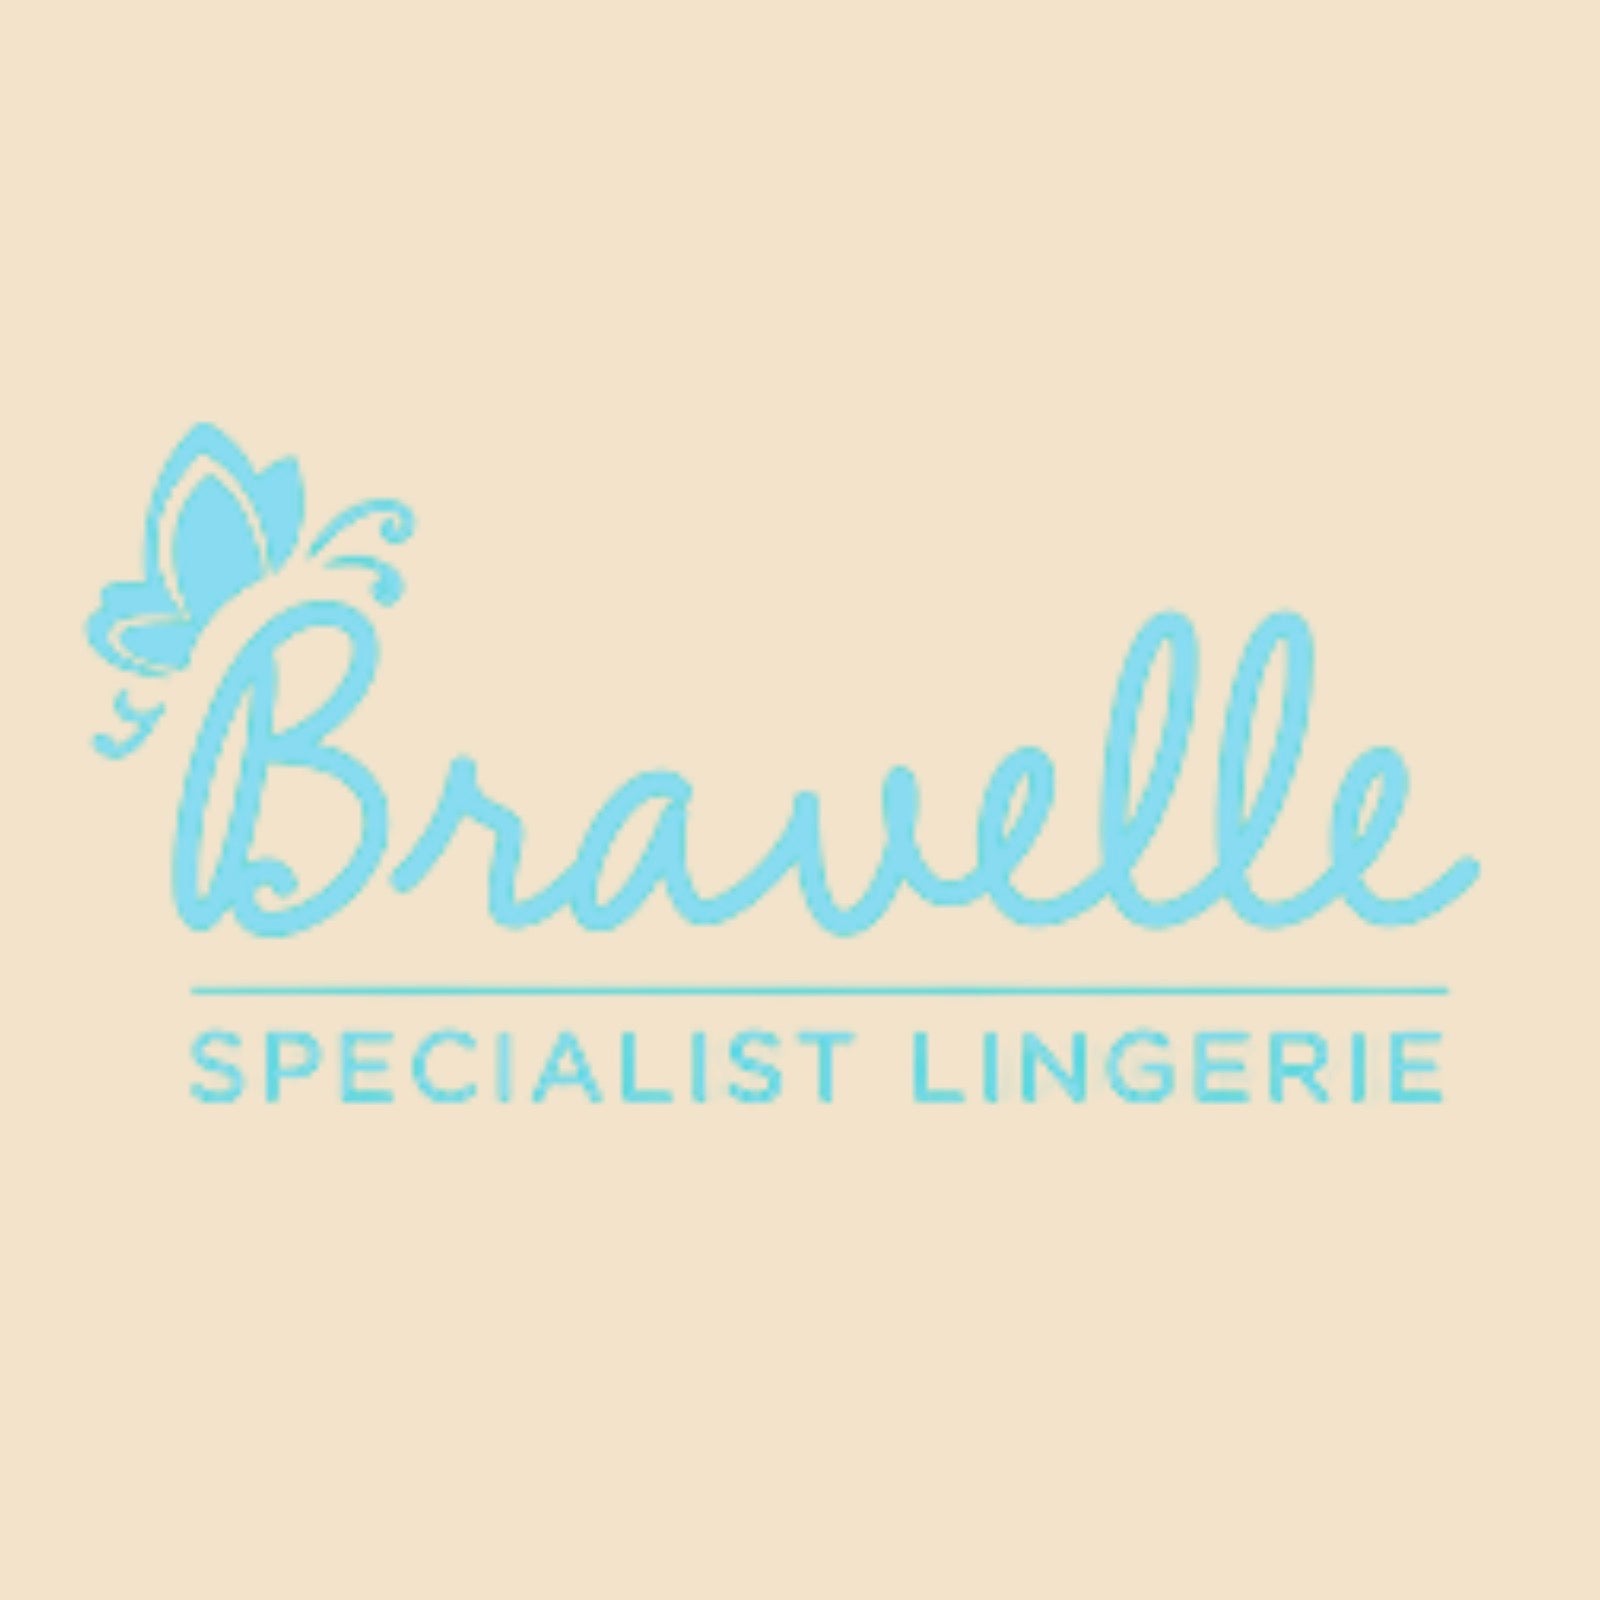 Bravelle - Specialist Lingerie